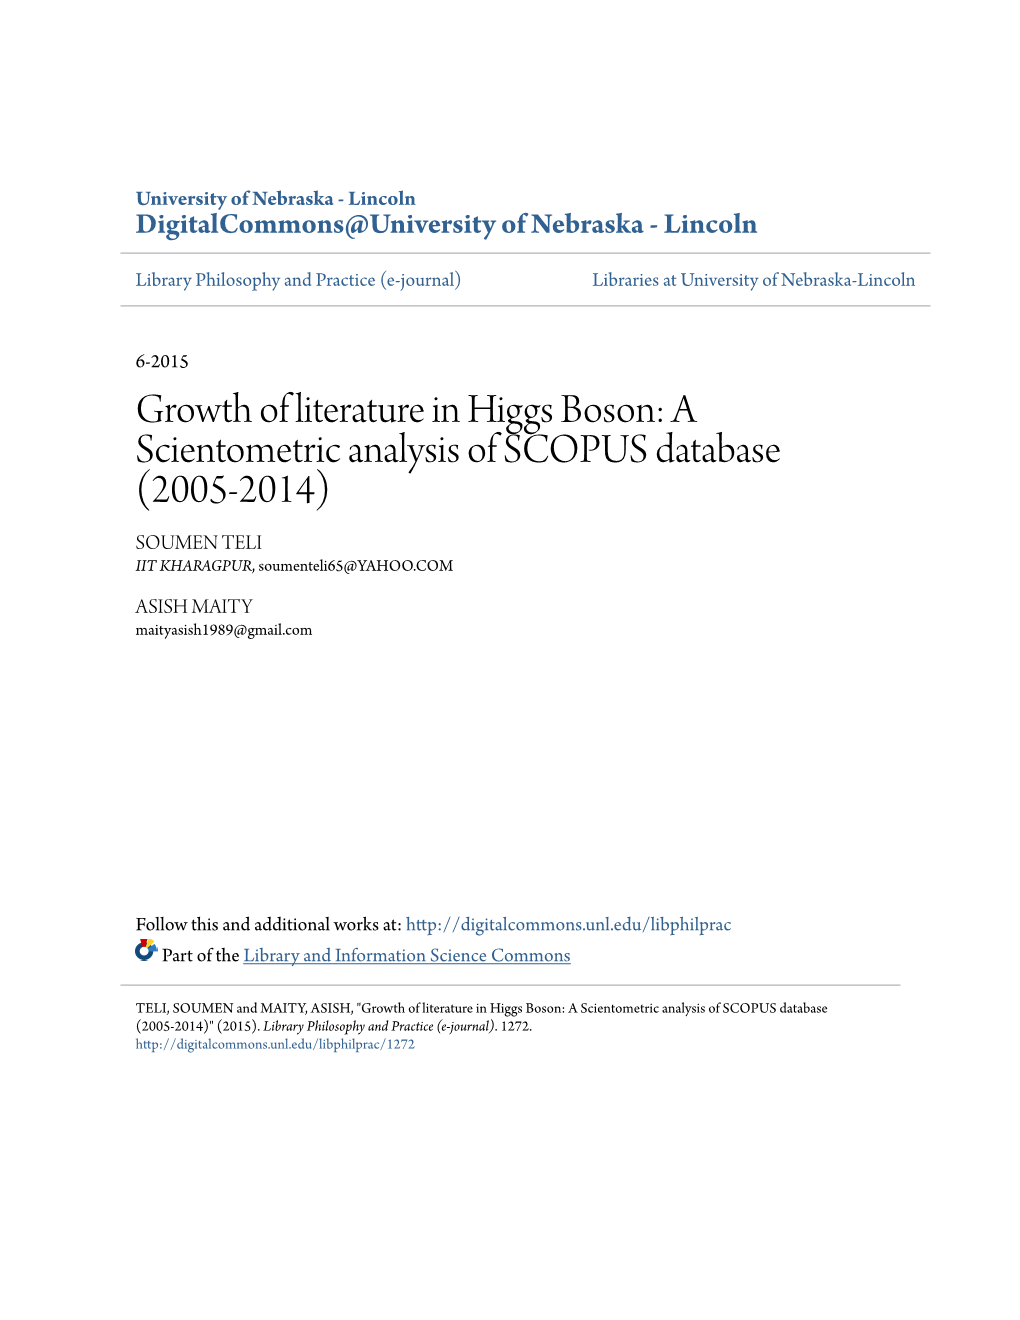 Growth of Literature in Higgs Boson: a Scientometric Analysis of SCOPUS Database (2005-2014) SOUMEN TELI IIT KHARAGPUR, Soumenteli65@YAHOO.COM